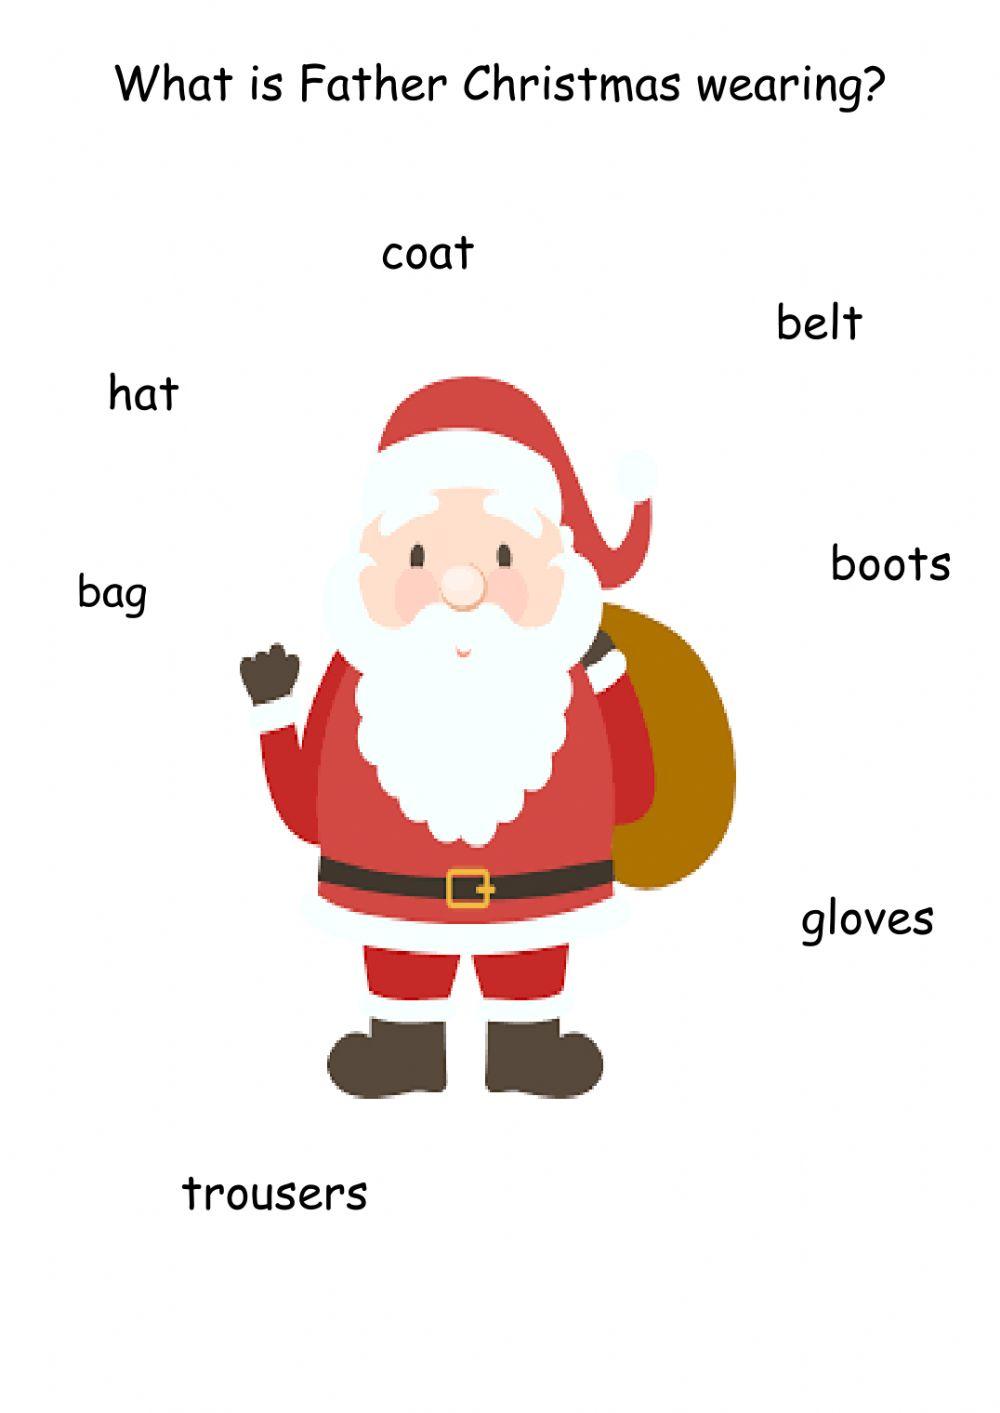 Silly Santa's clothes